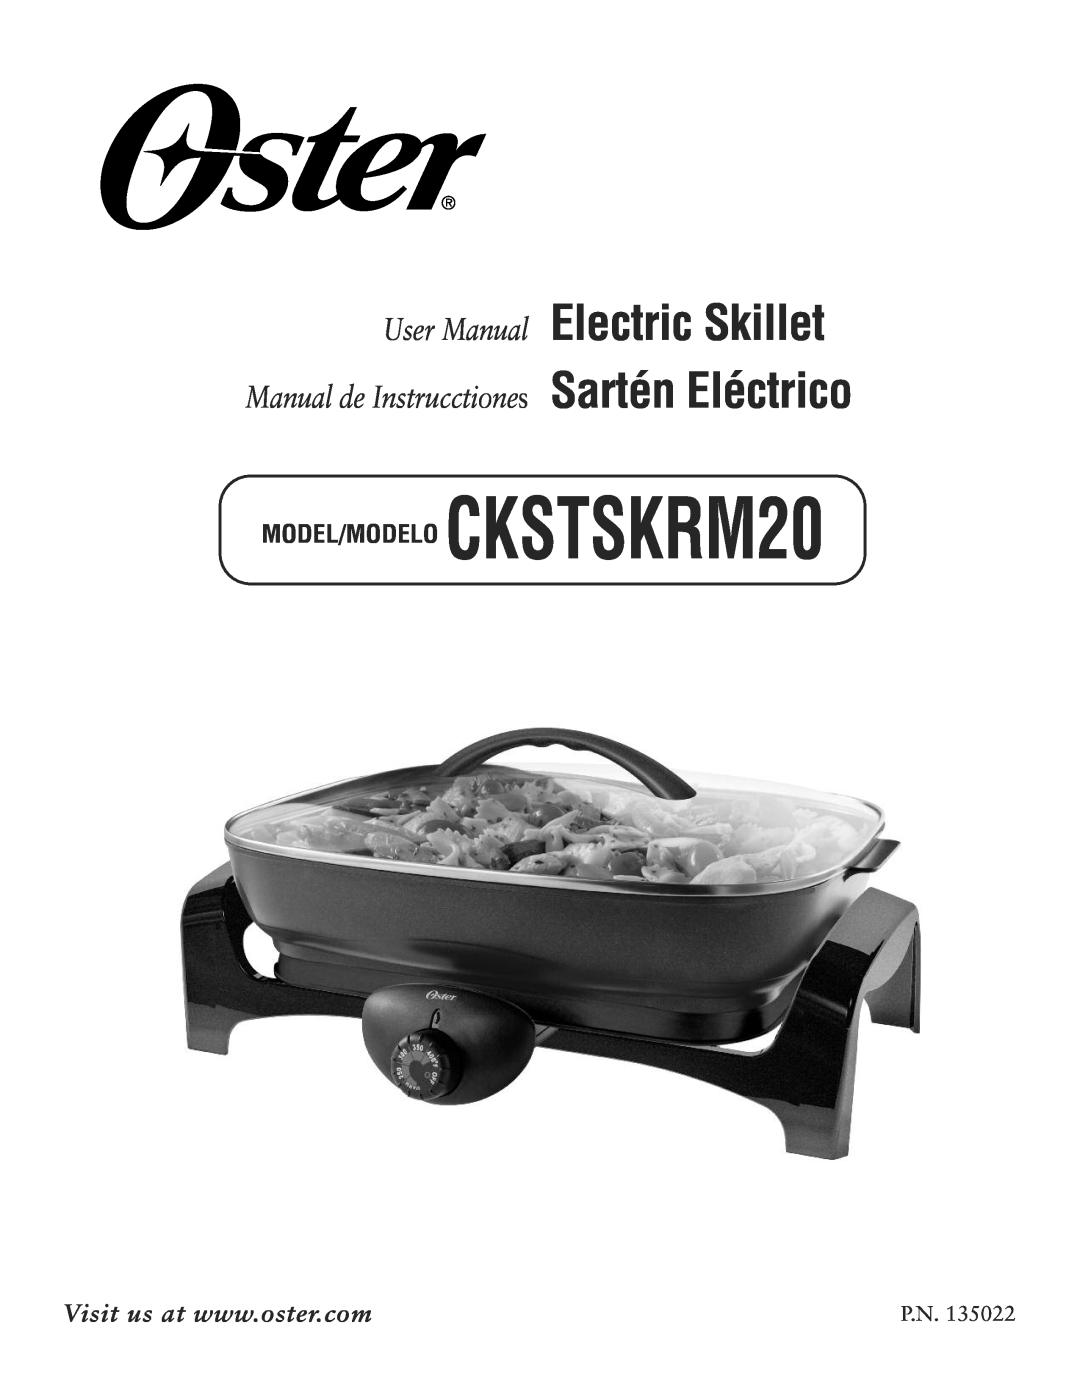 Oster user manual MODEL/MODELO CKSTSKRM20, Manual de Instrucctiones Sartén Eléctrico 